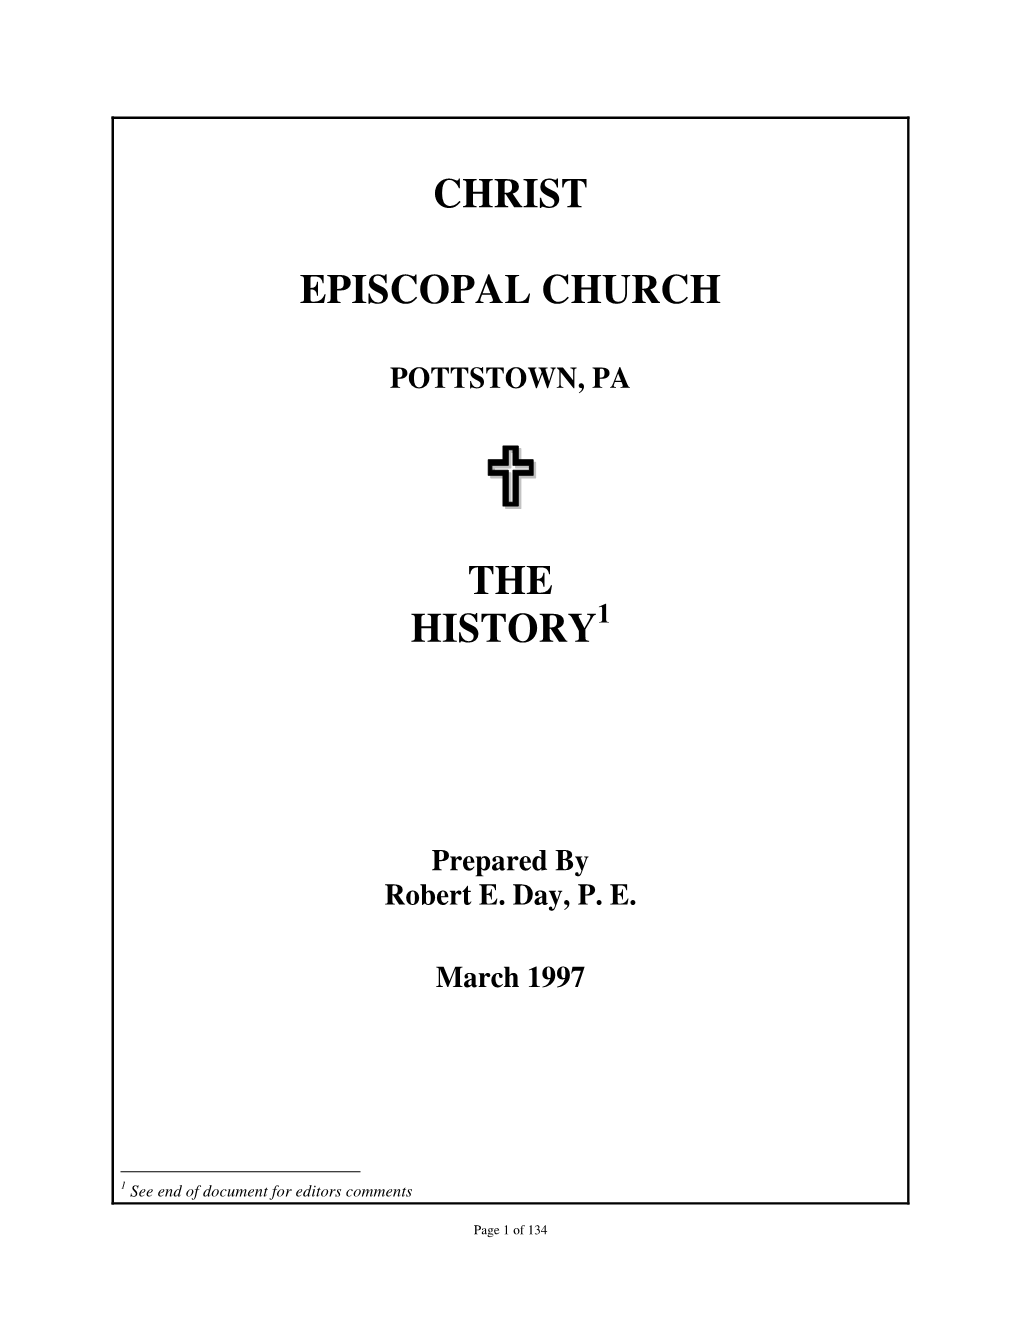 Christ Episcopal Church the History